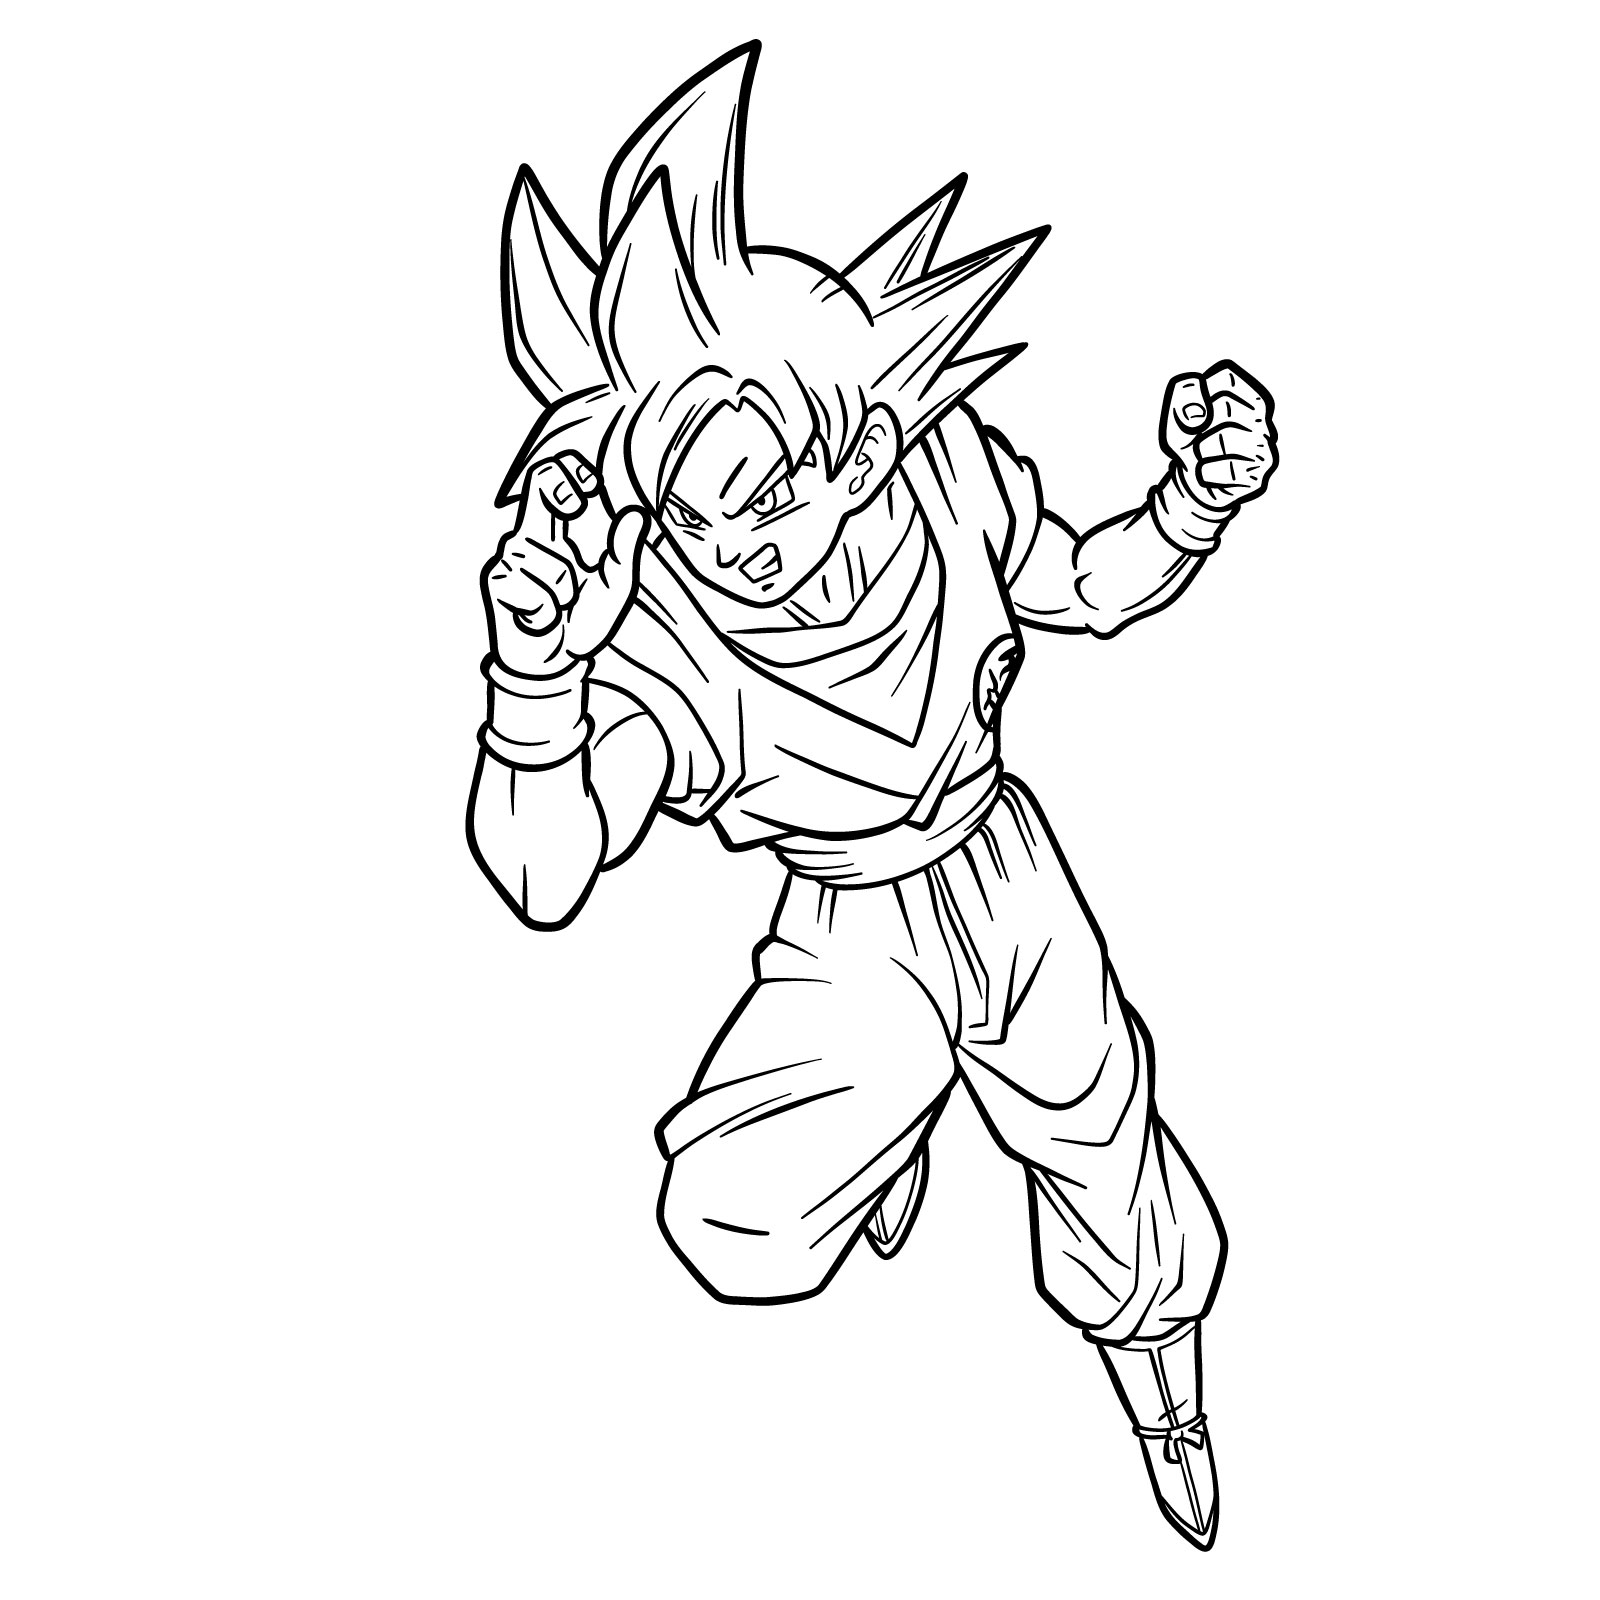 How to Draw Goku Super Saiyan God - final step